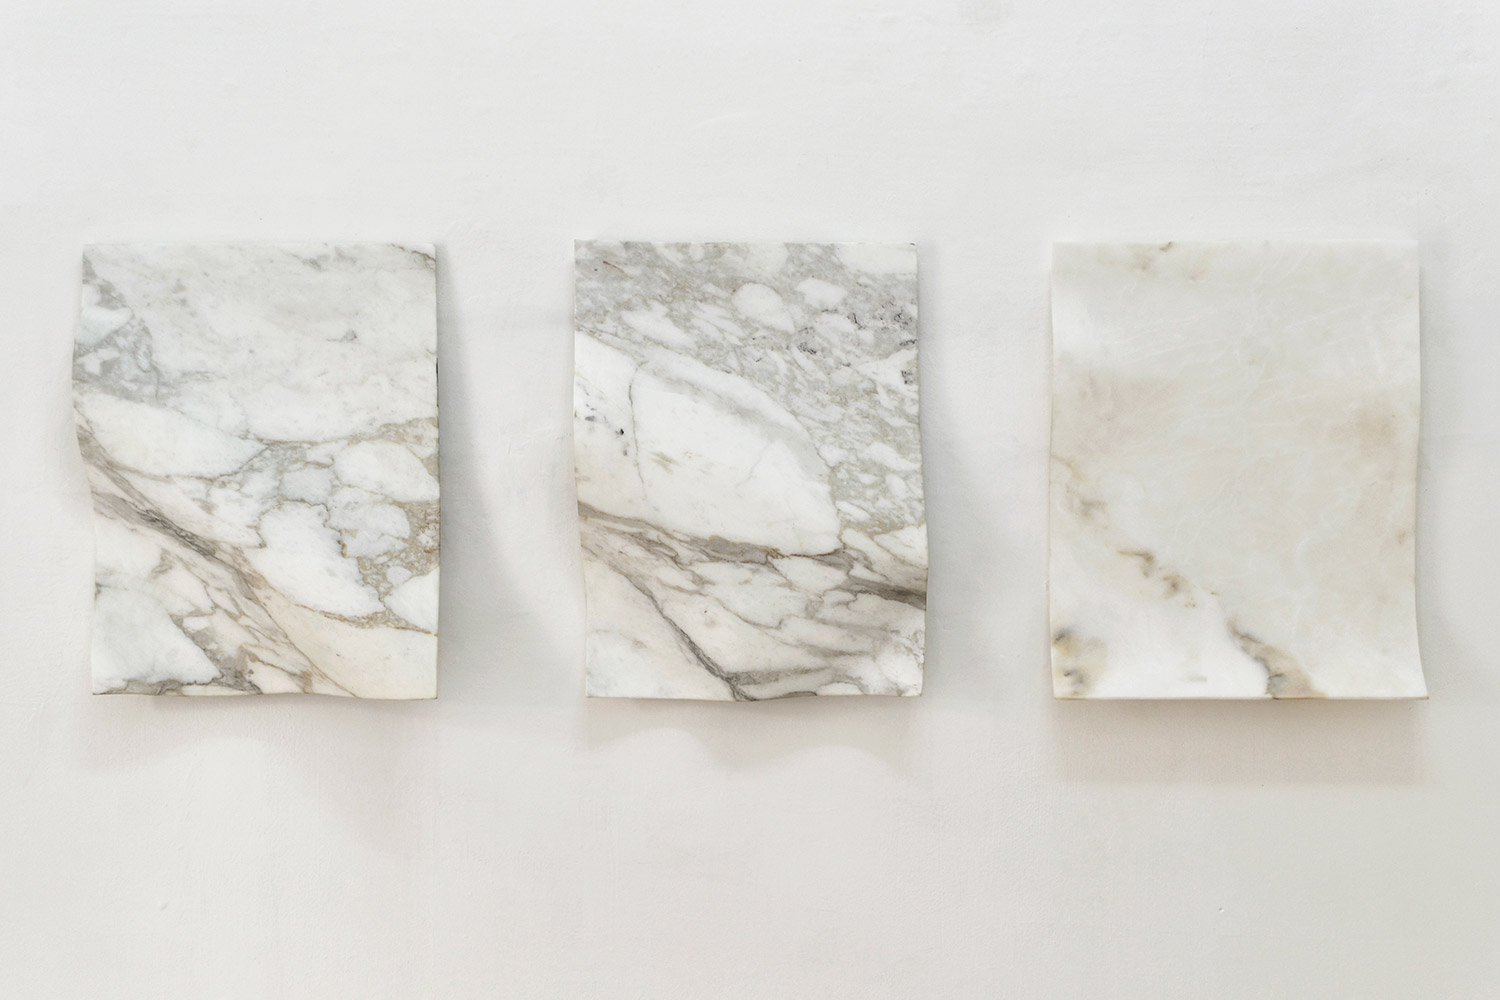 Antonio Trotta, Sospiri, 1999-2002, marble, 37x46x8 cm each